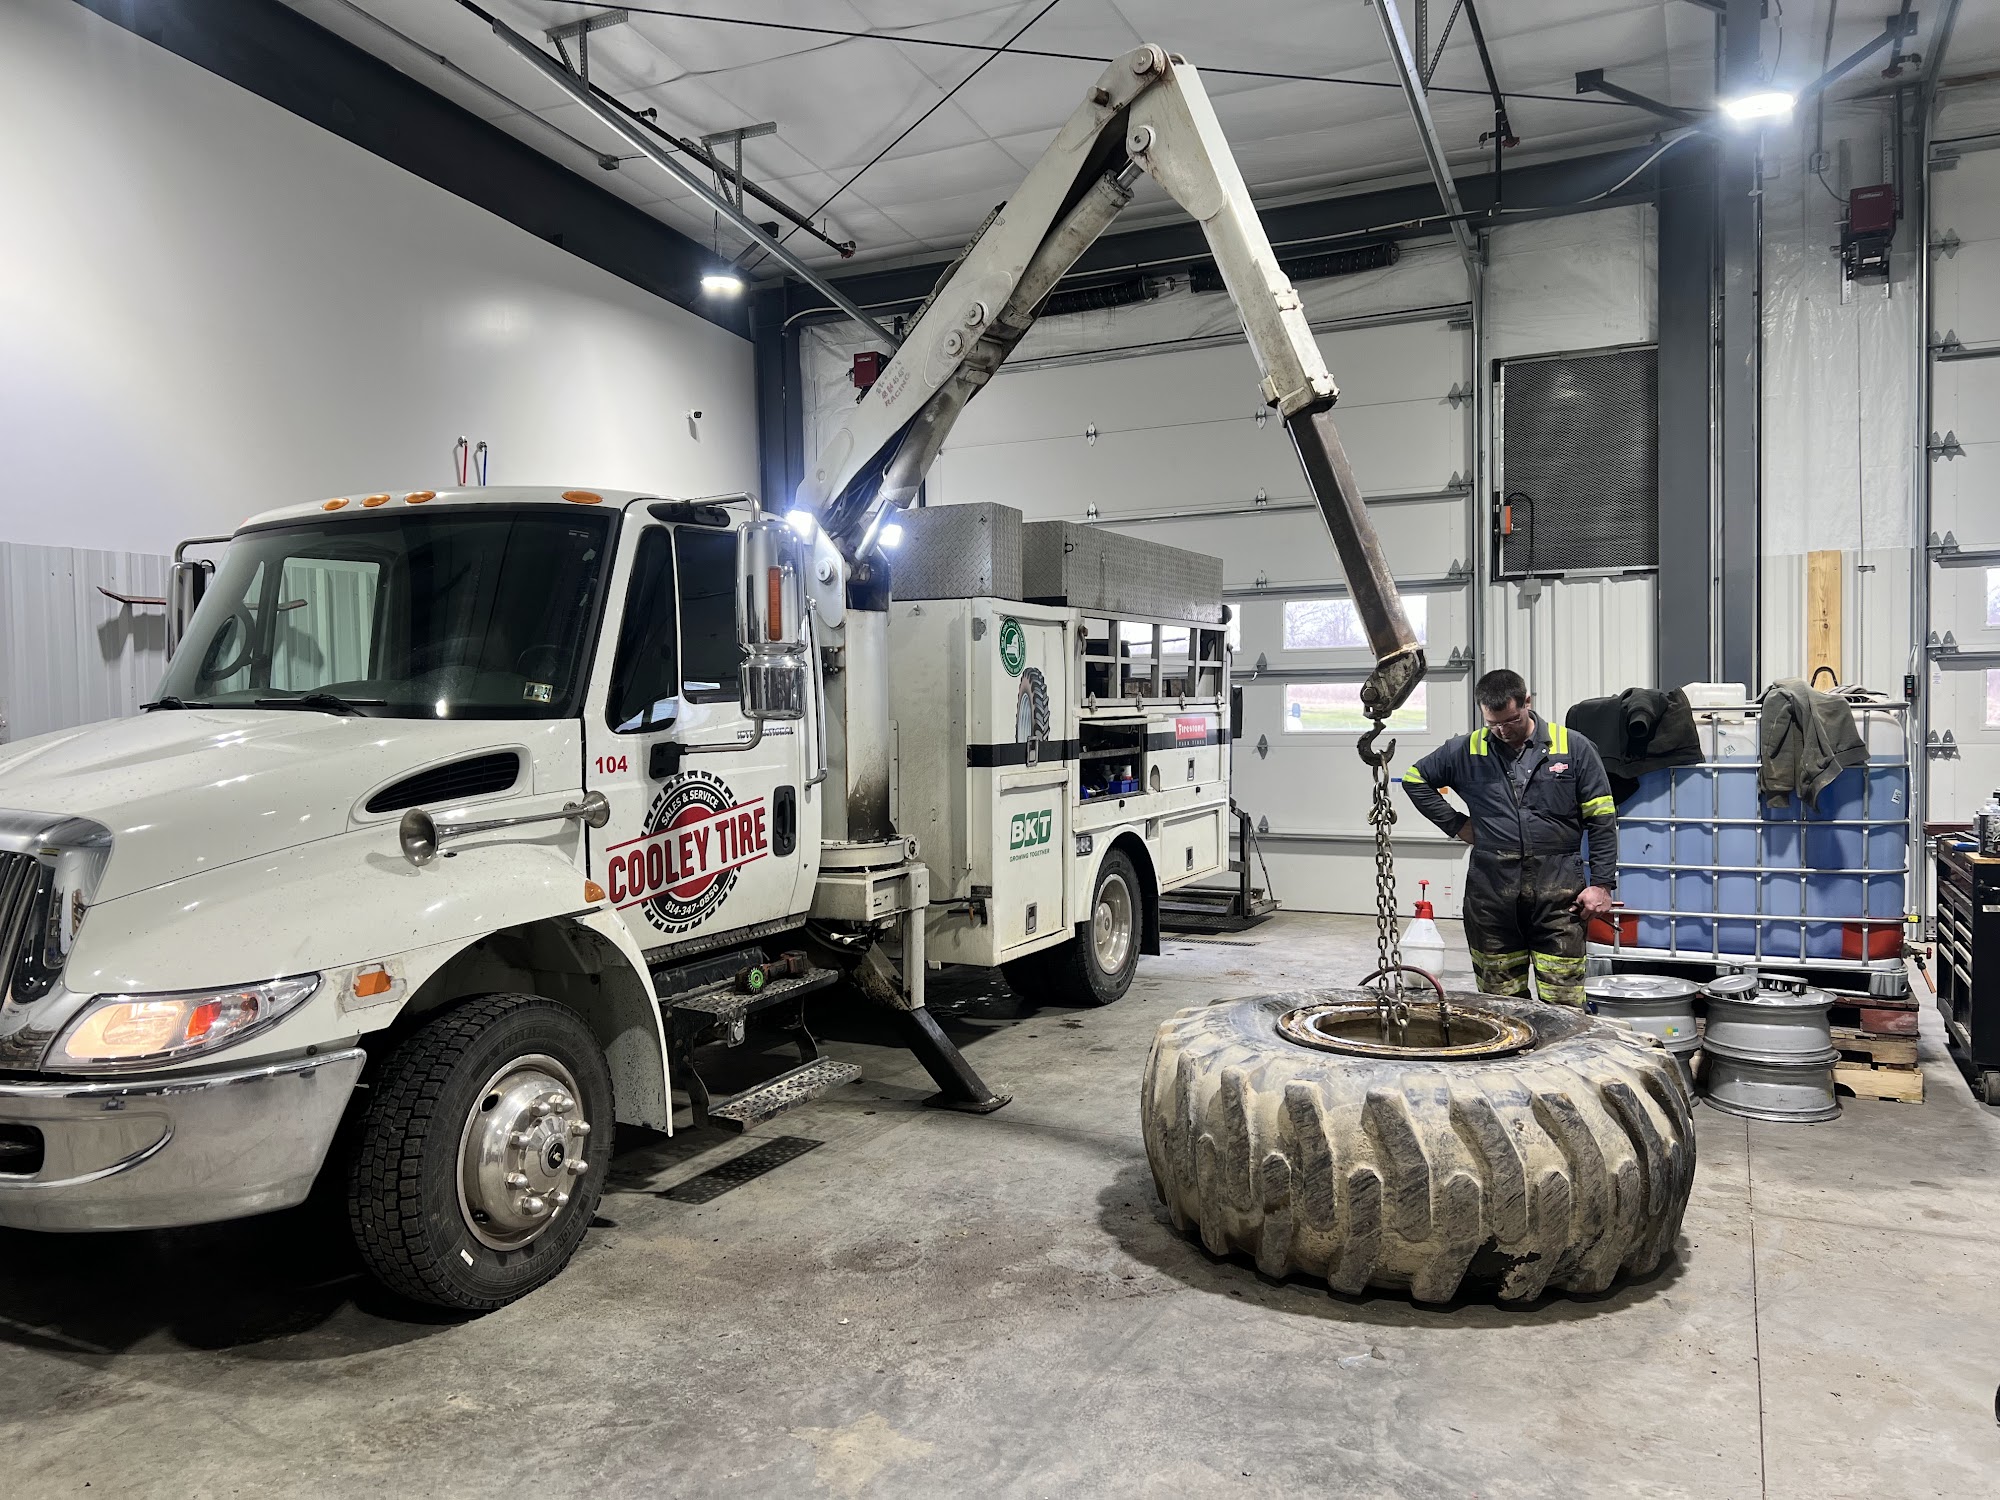 Cooley Tire & Truck Repair